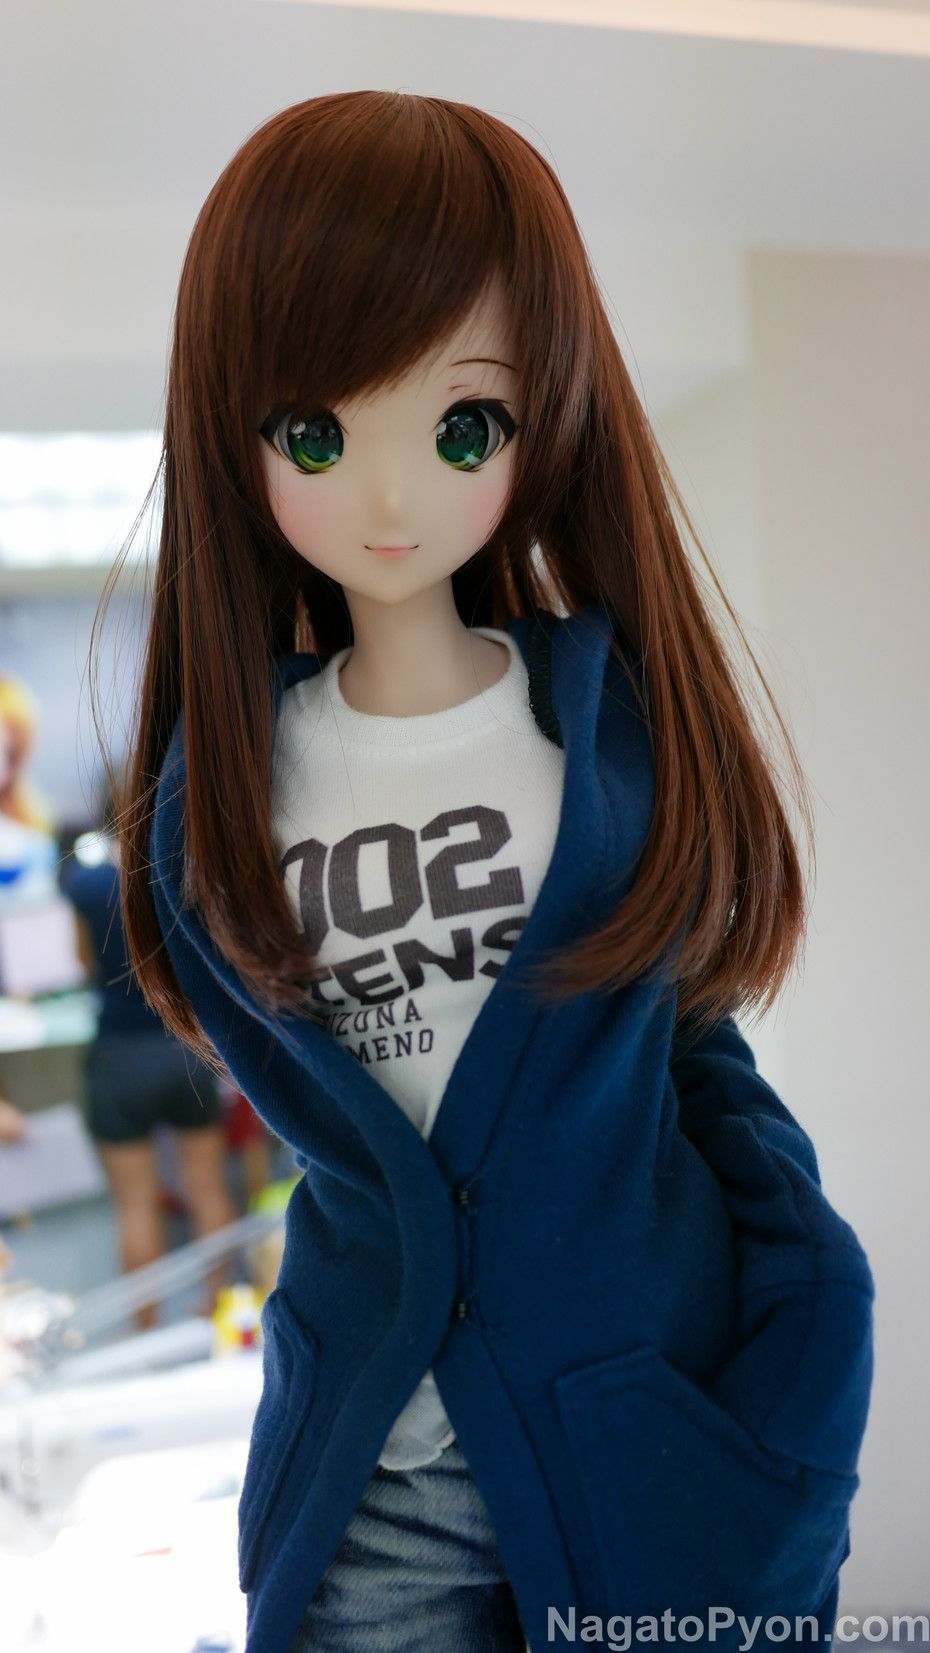 Best Smart Doll Dreams image. Smart doll, Anime dolls, Cute dolls